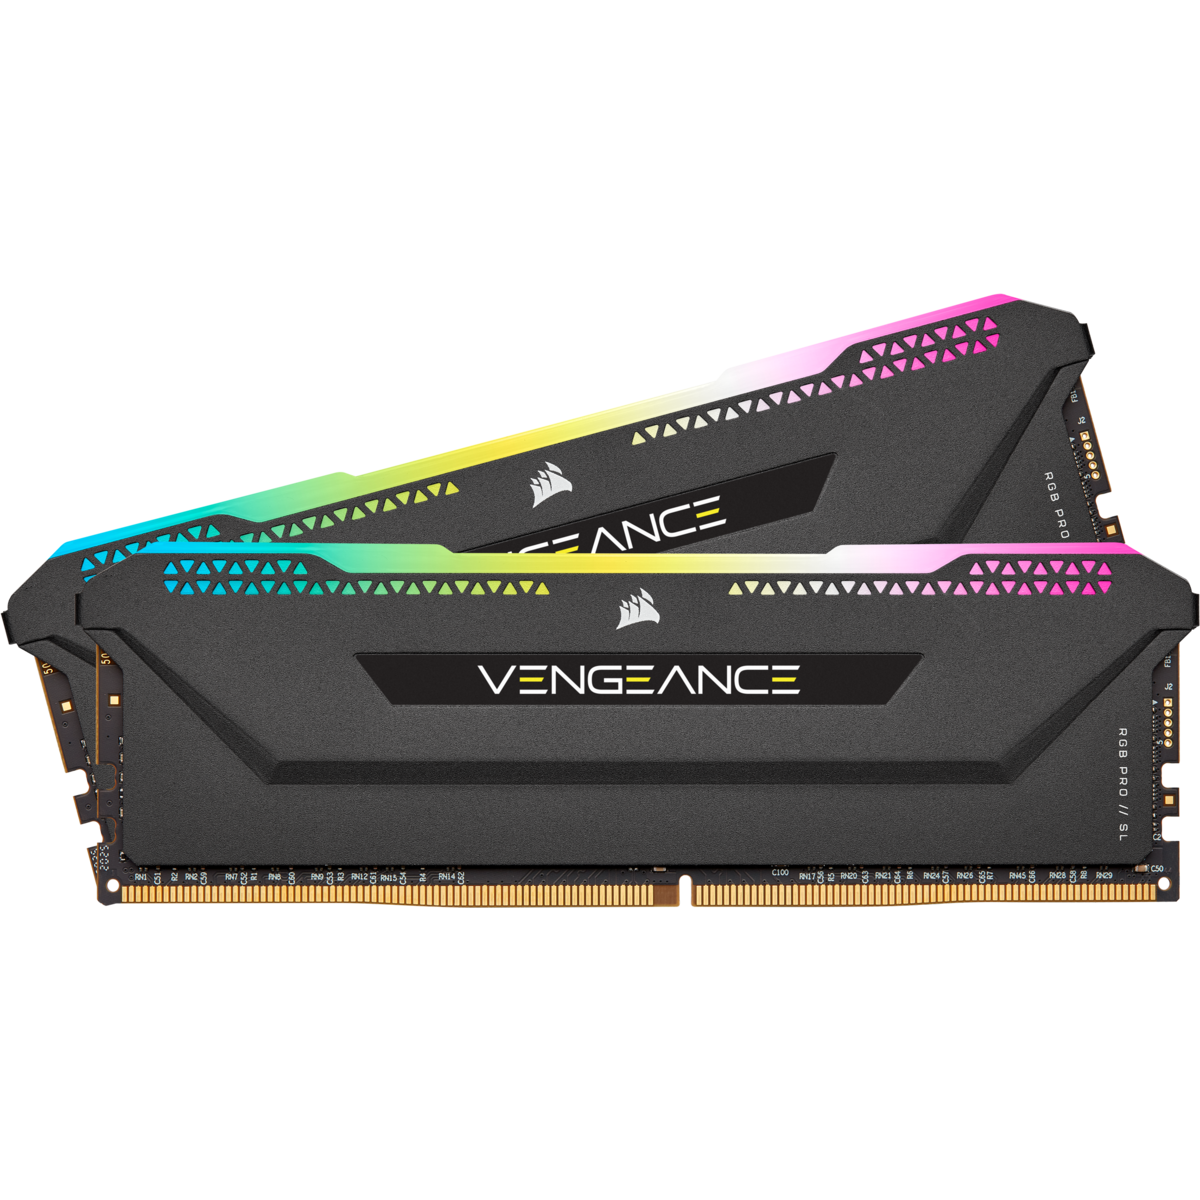 CORSAIR VENGEANCE RGB PRO SL 64GB (2x32GB) DDR4 3600MHz C18